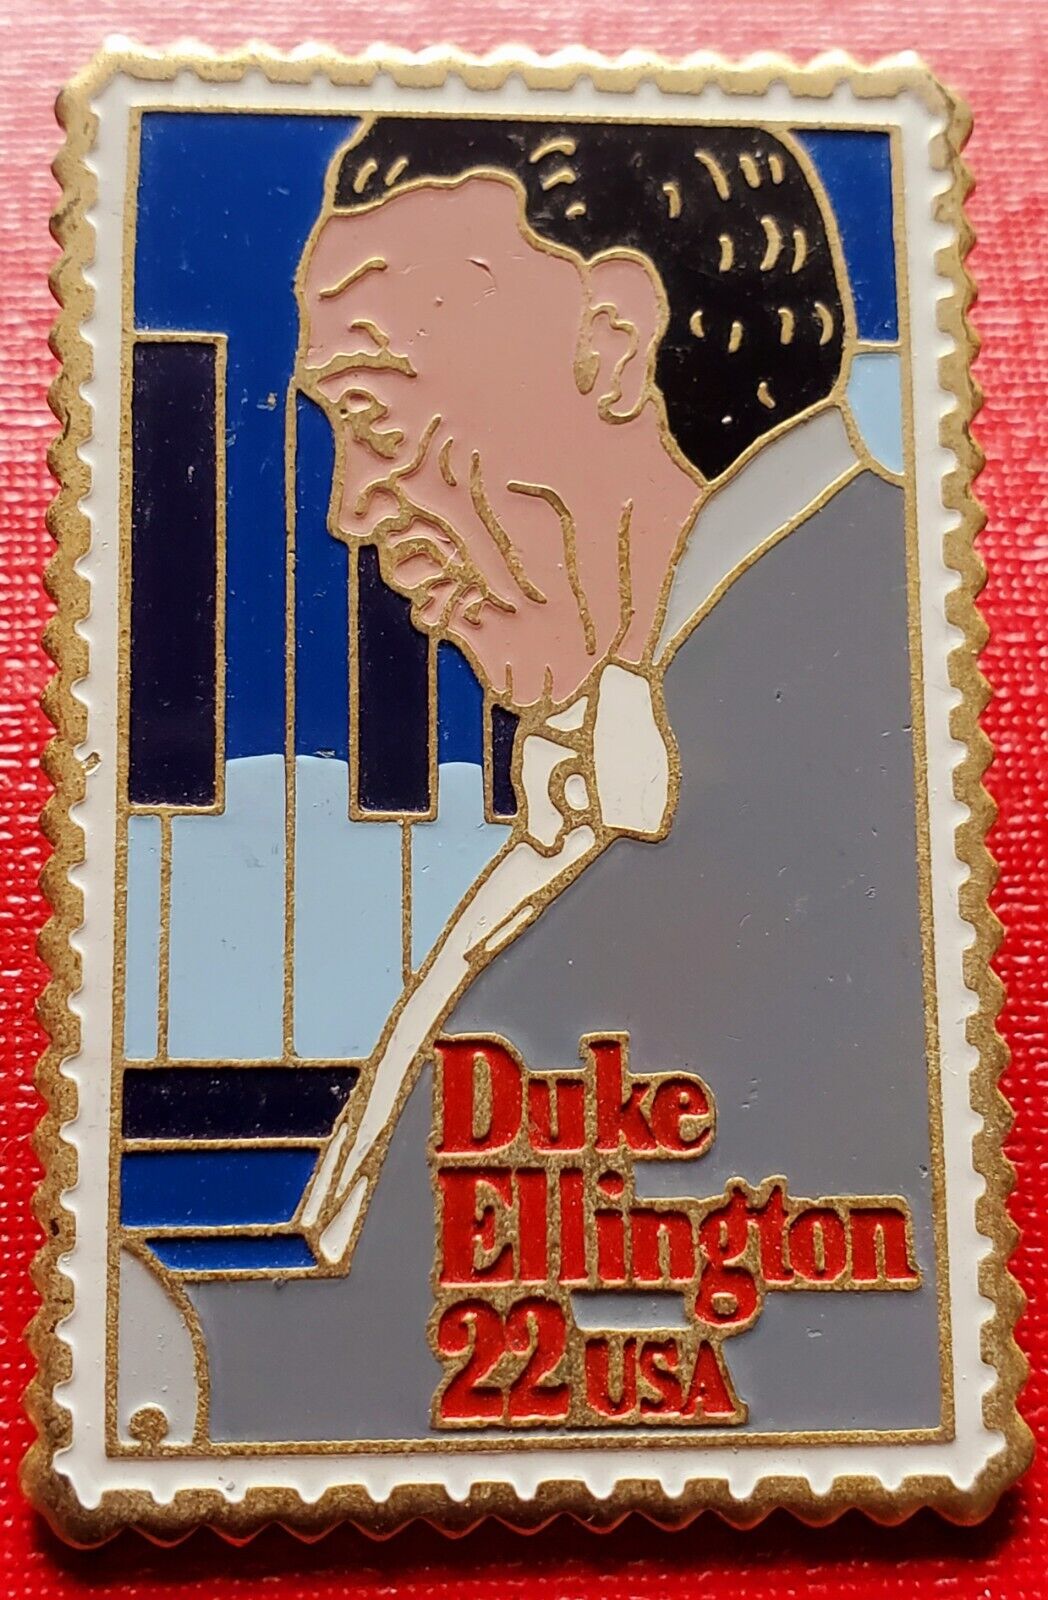 1986 Duke Ellington American Jazz Pianist Musician USPS 22 Cent Stamp Pin